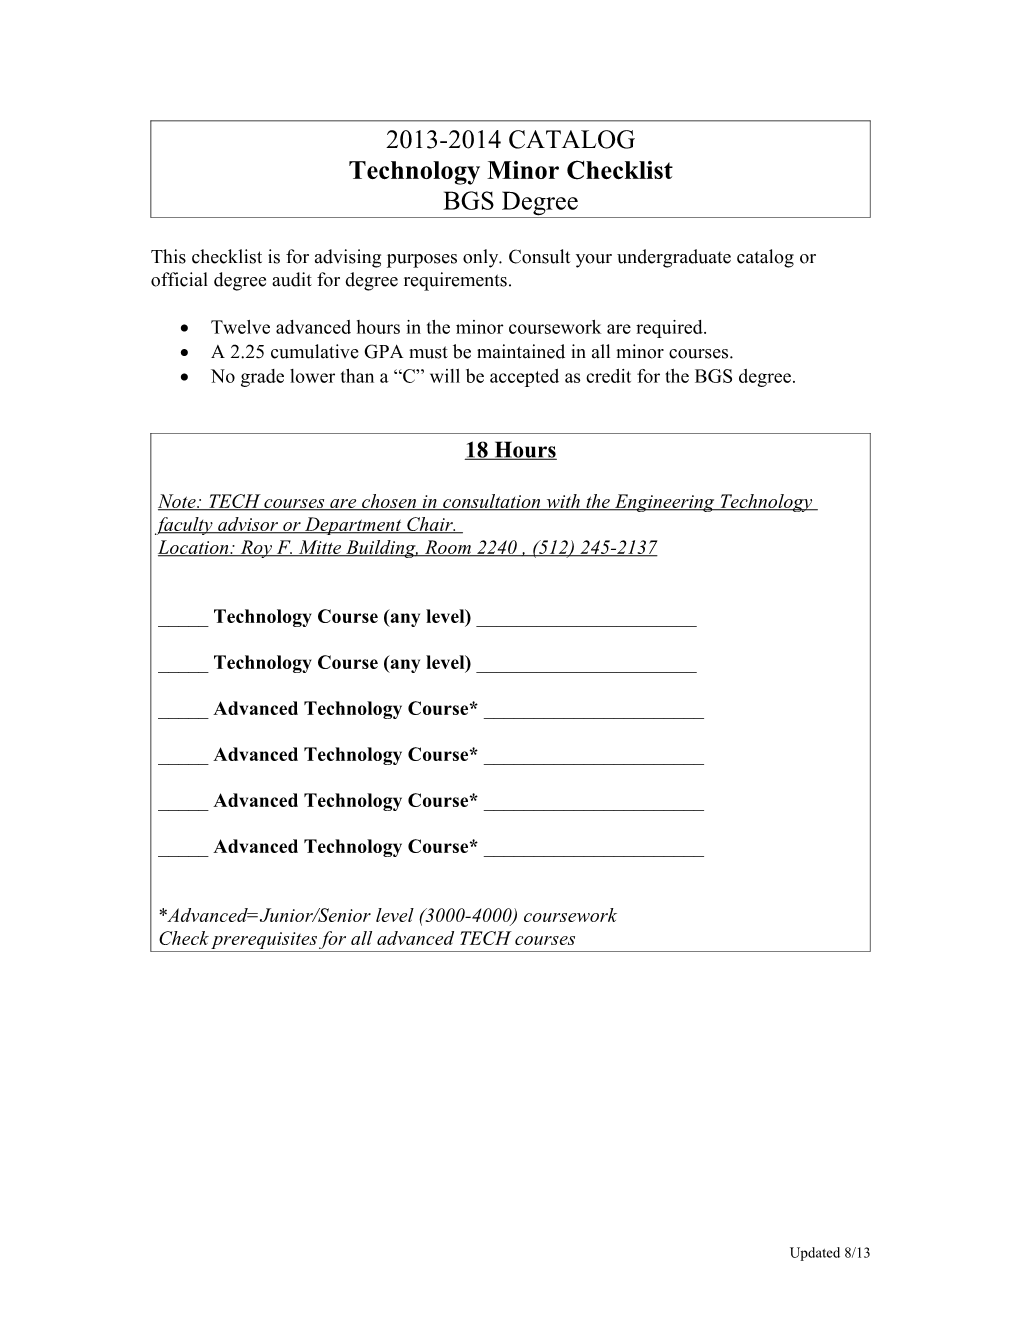 Technology Minor Checklist